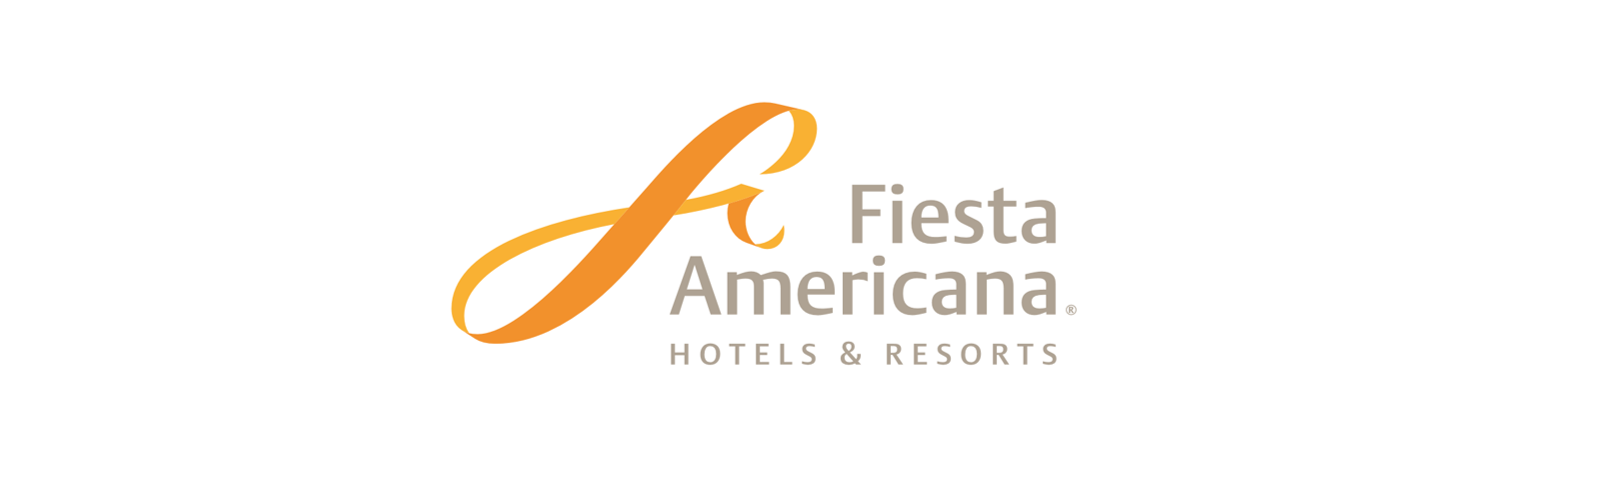 Fiesta_Americana_Webinar_ABC-Site_Header_Placeholder_1600x489